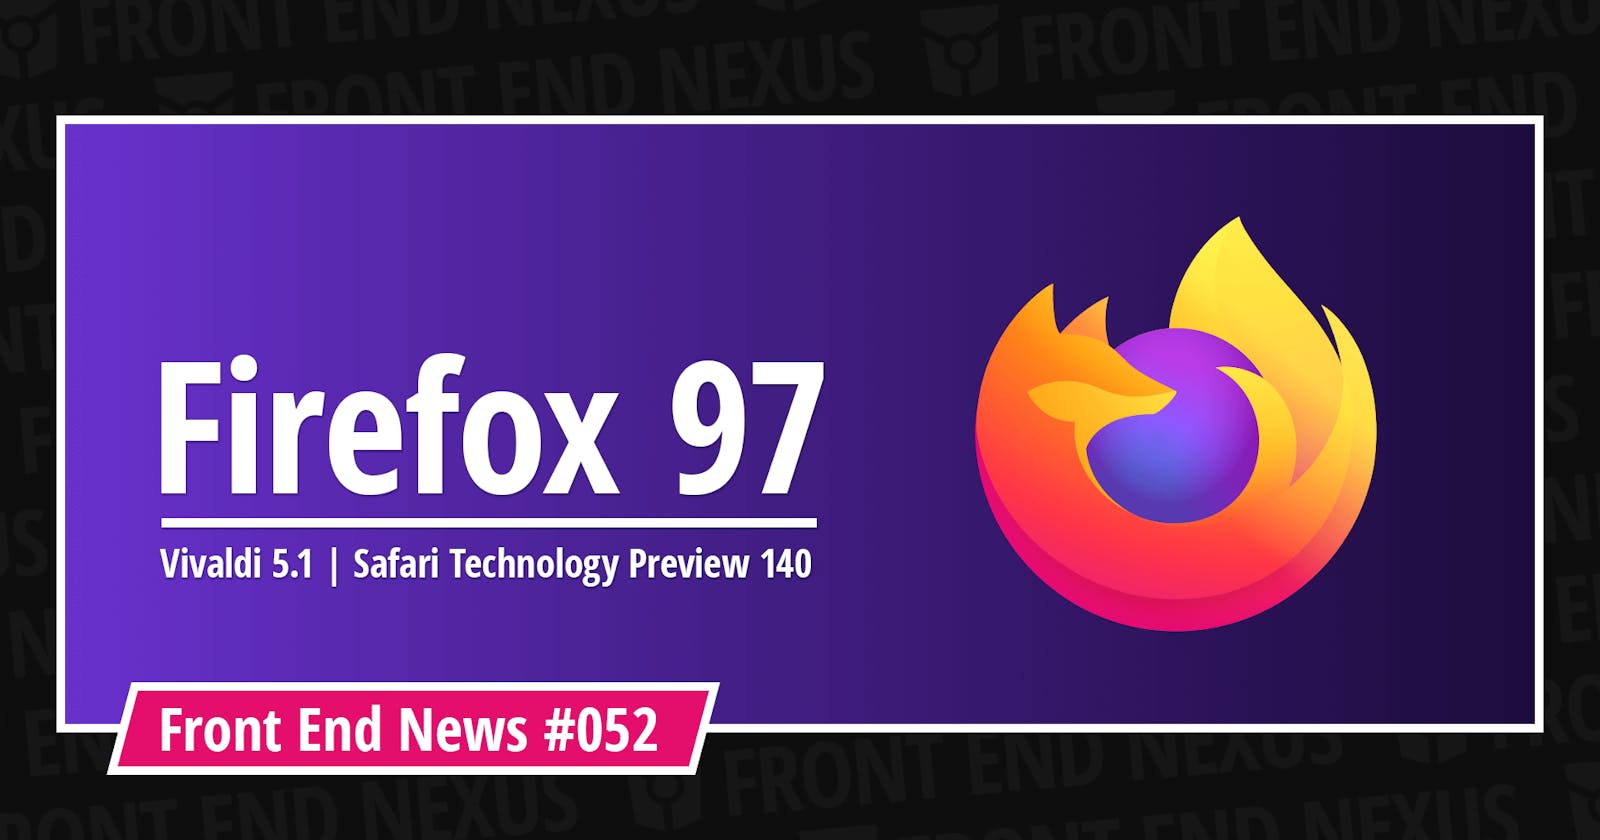 Firefox 97, Vivaldi 5.1, Safari Technology Preview 140, Ember.js 4.2.0, Node v17.5.0, npm 8.5.0, and more | Front End News #052